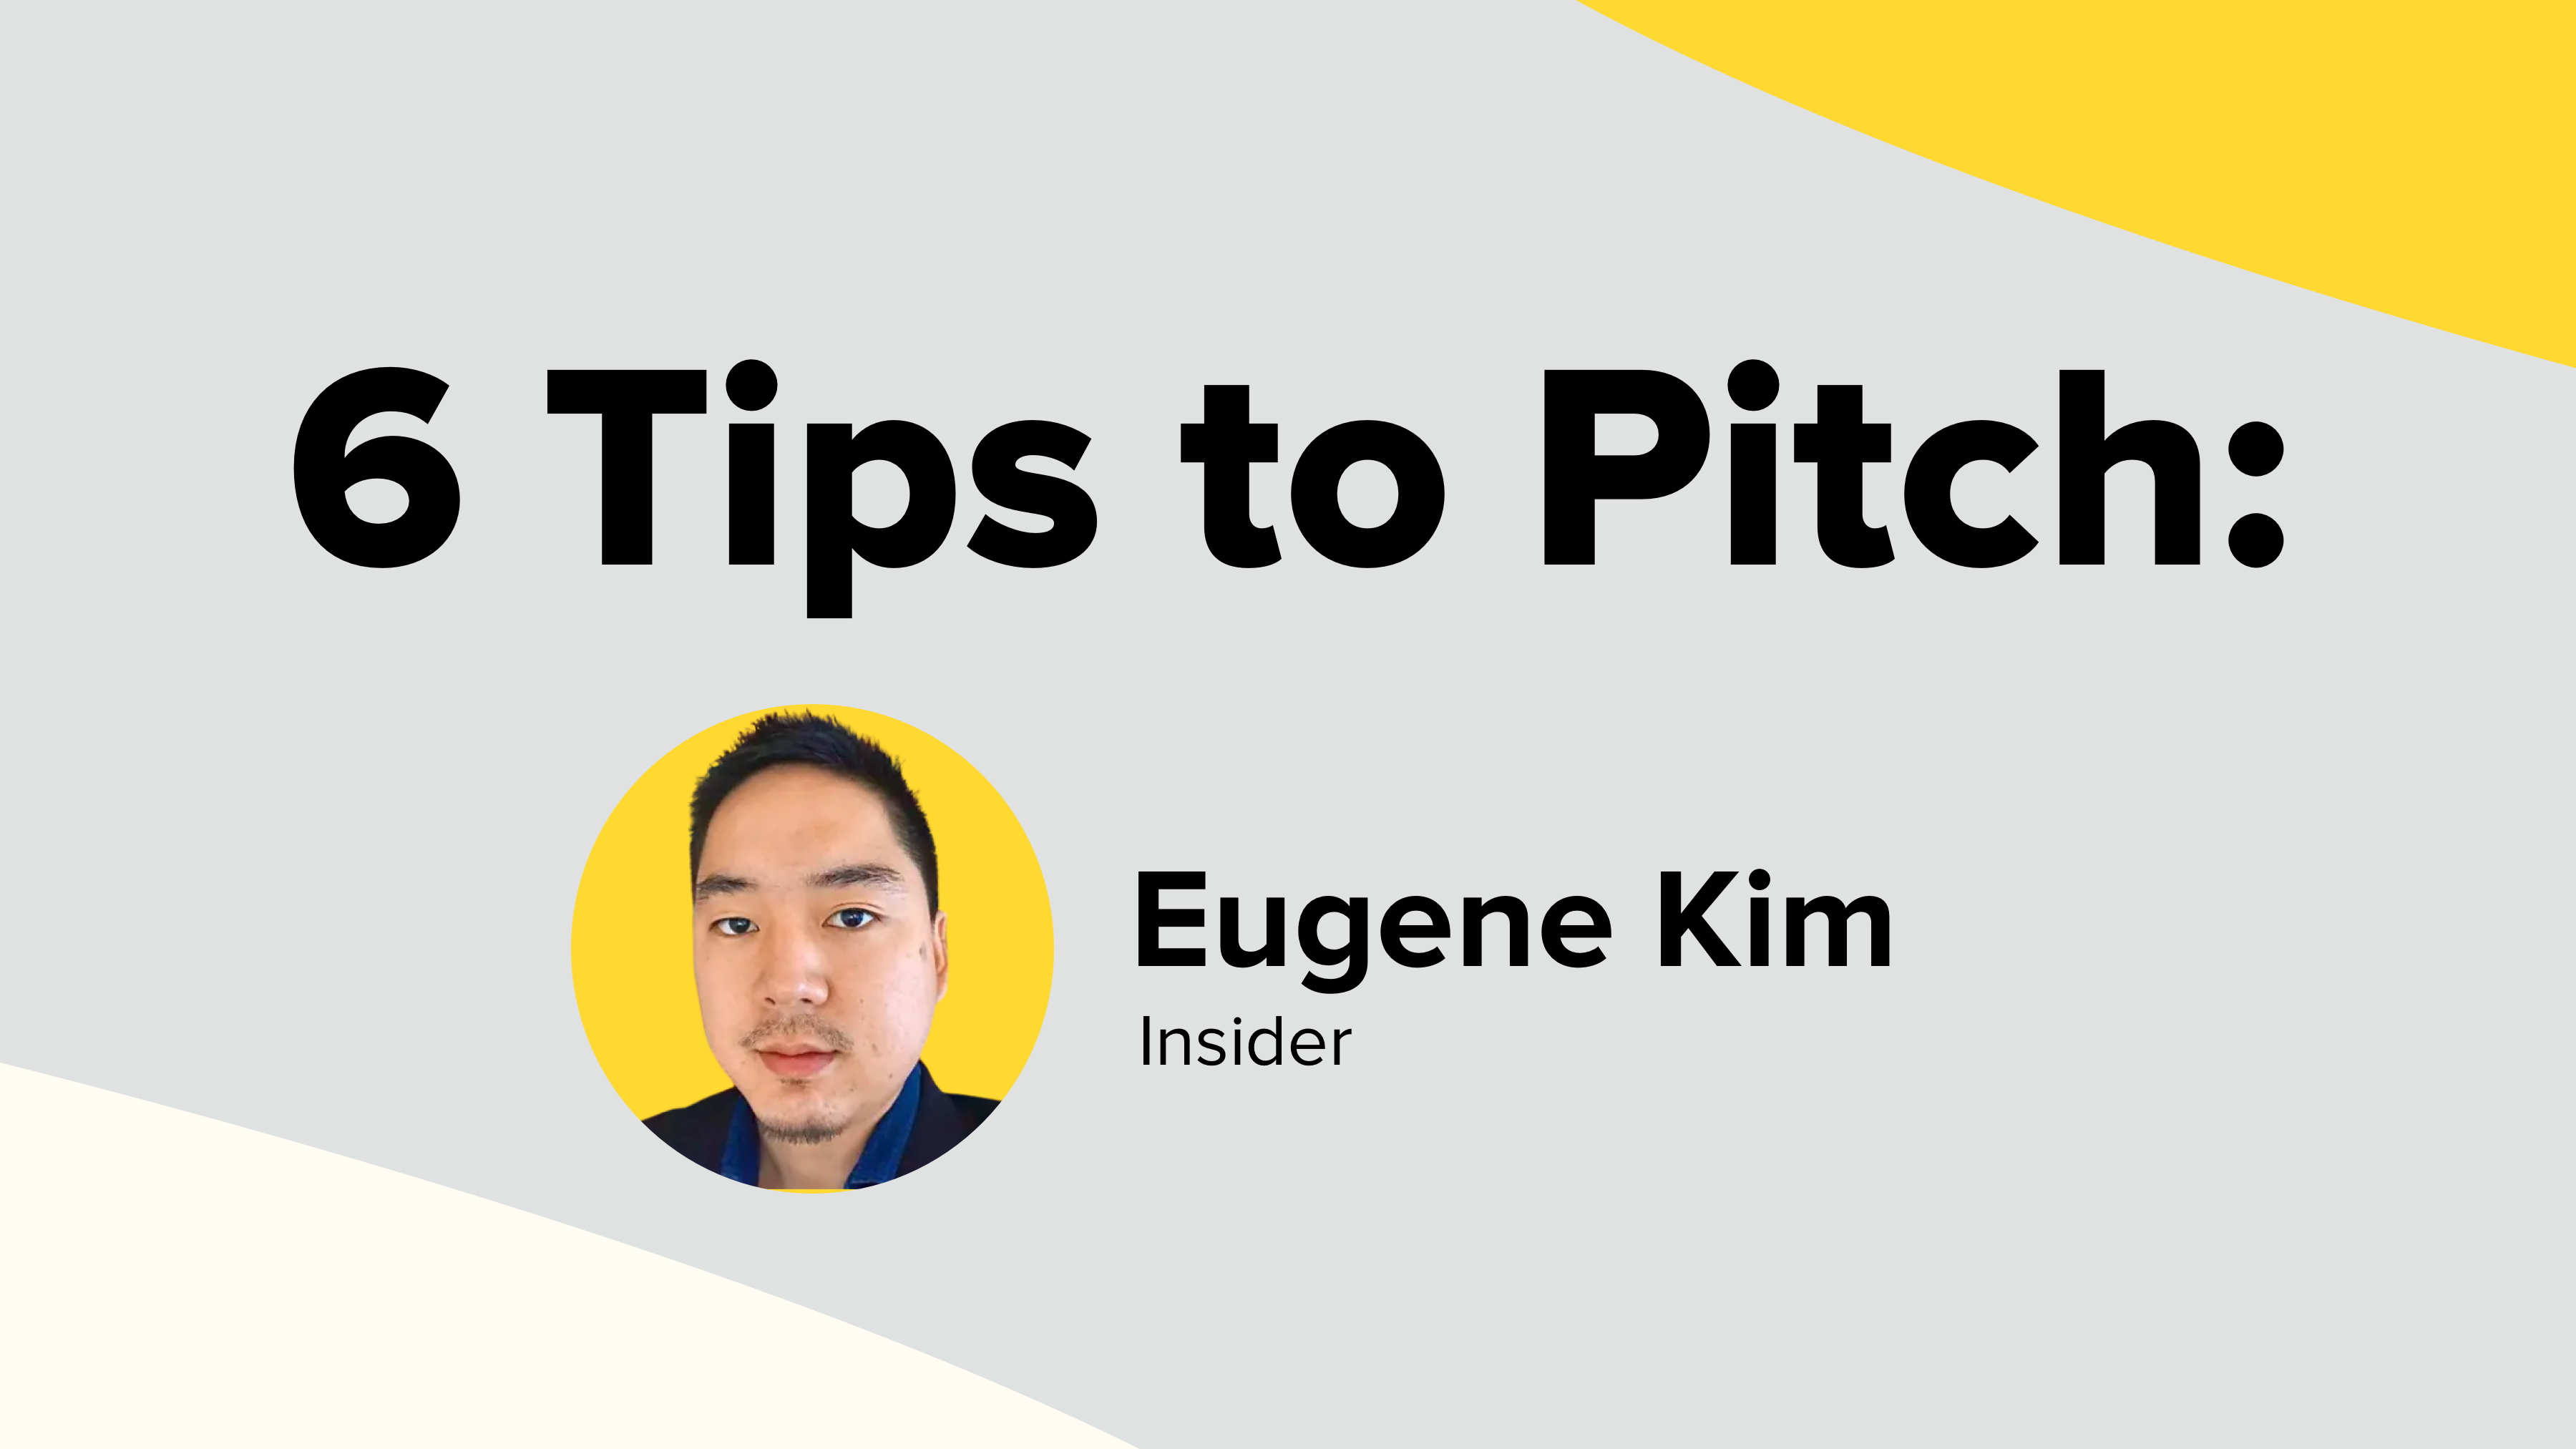 6 Tips to Pitch Eugene Kim of Insider